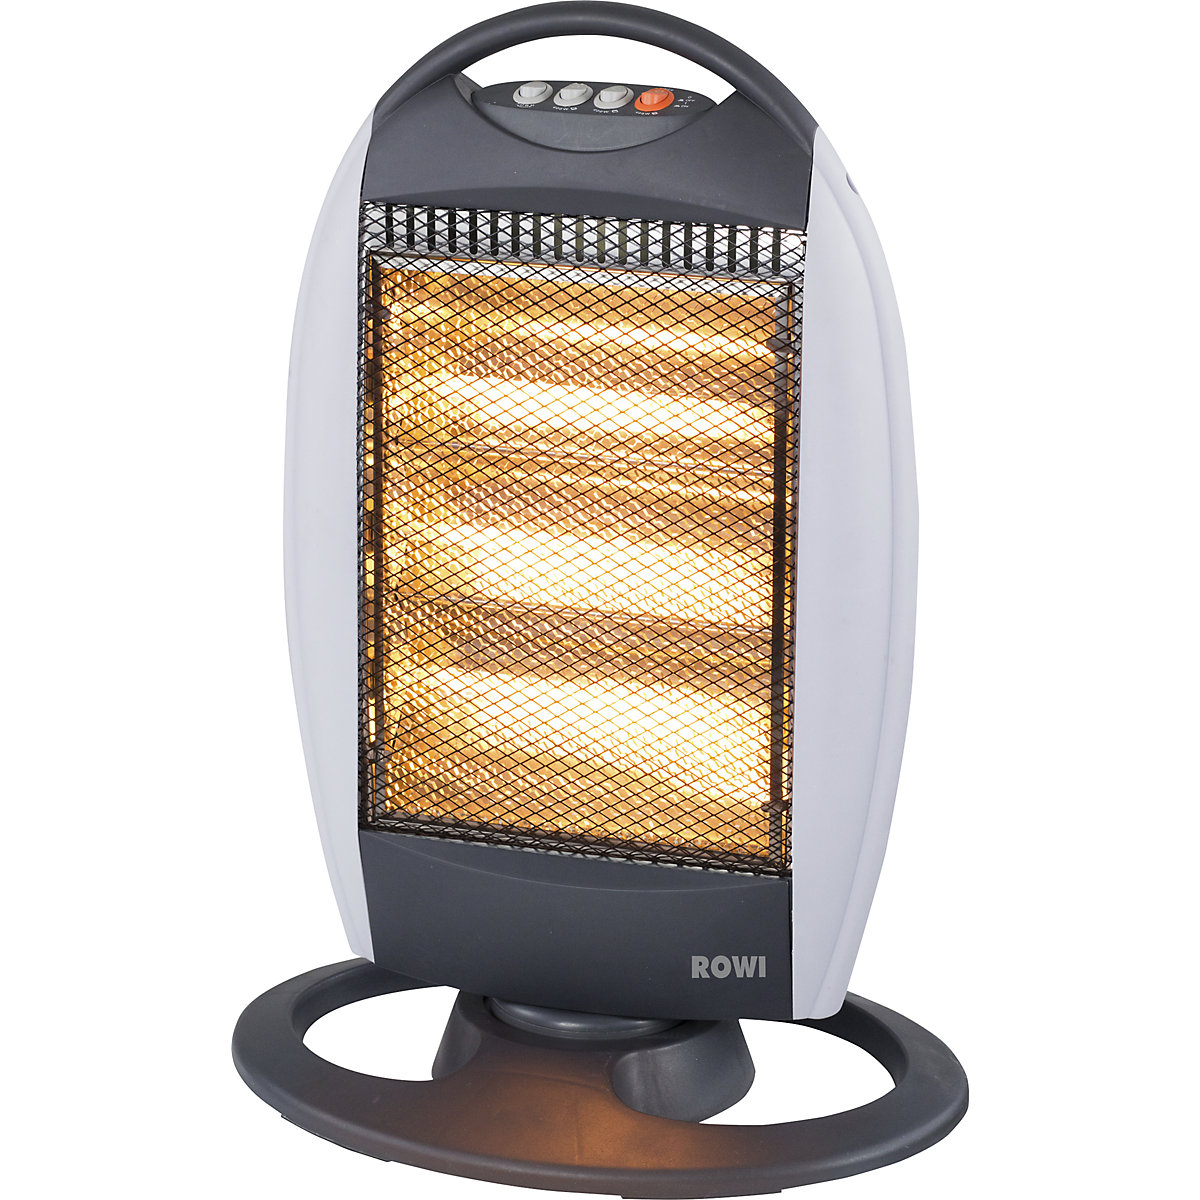 Halogen radiant heater